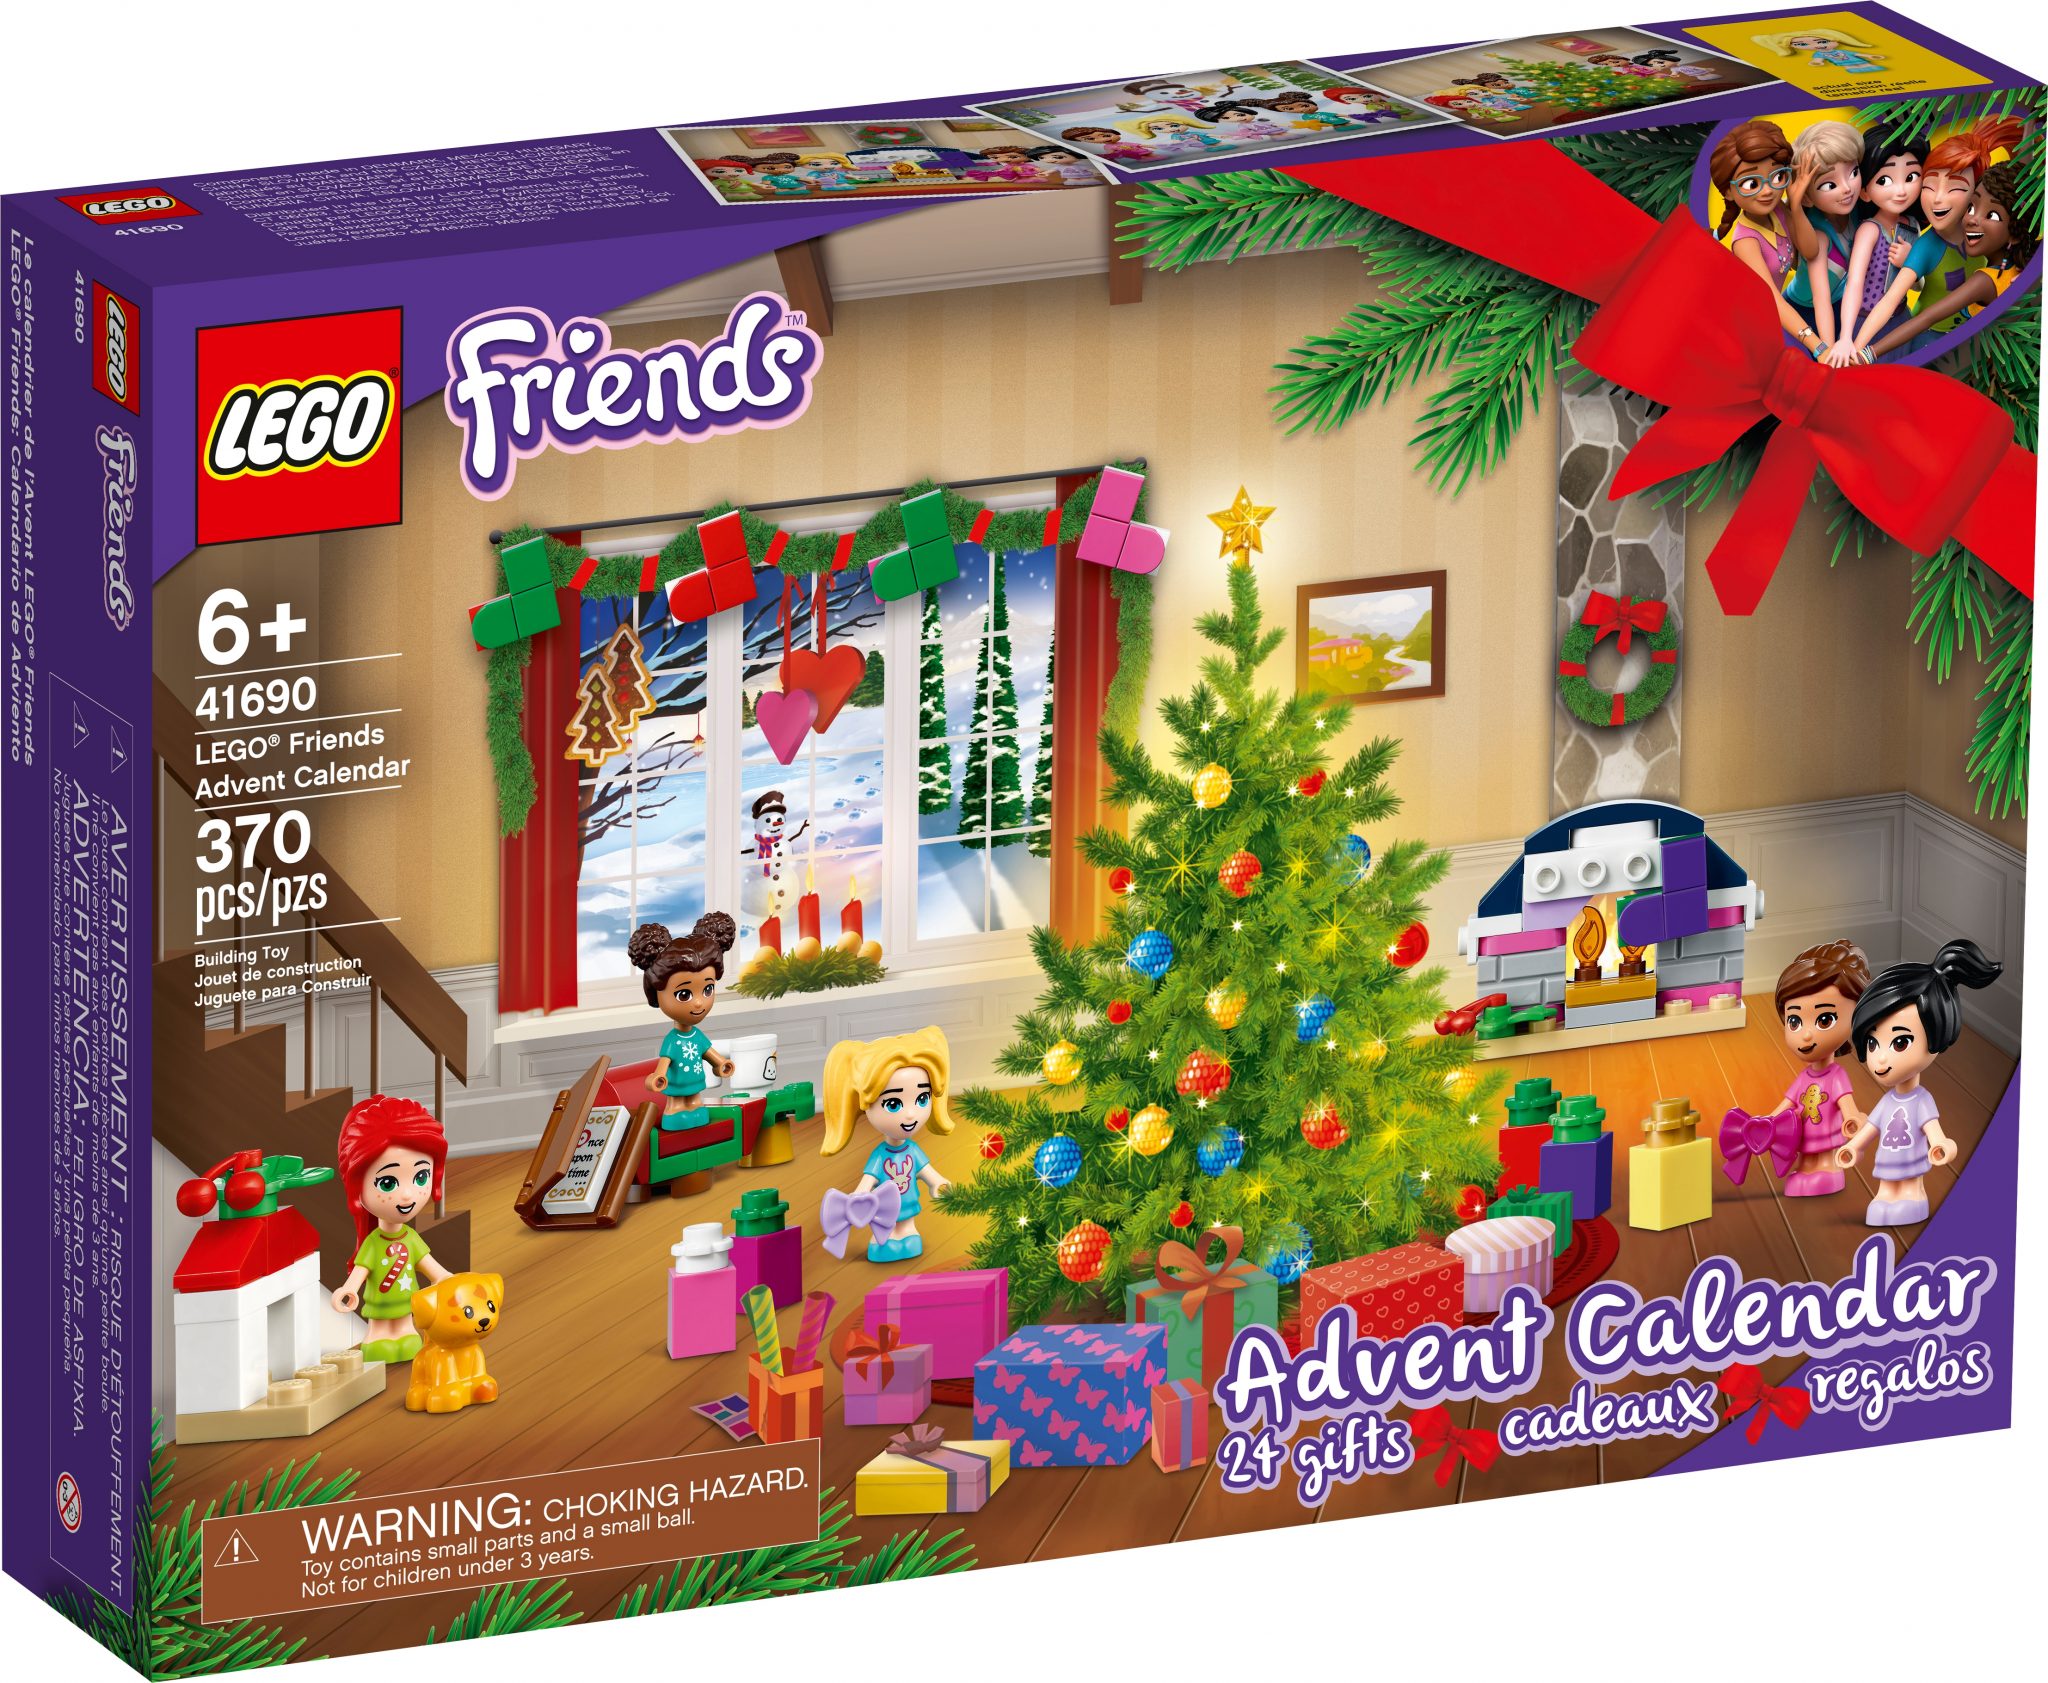 LEGO Friends 2021 Advent Calendar 41690 Revealed! The Brick Post!